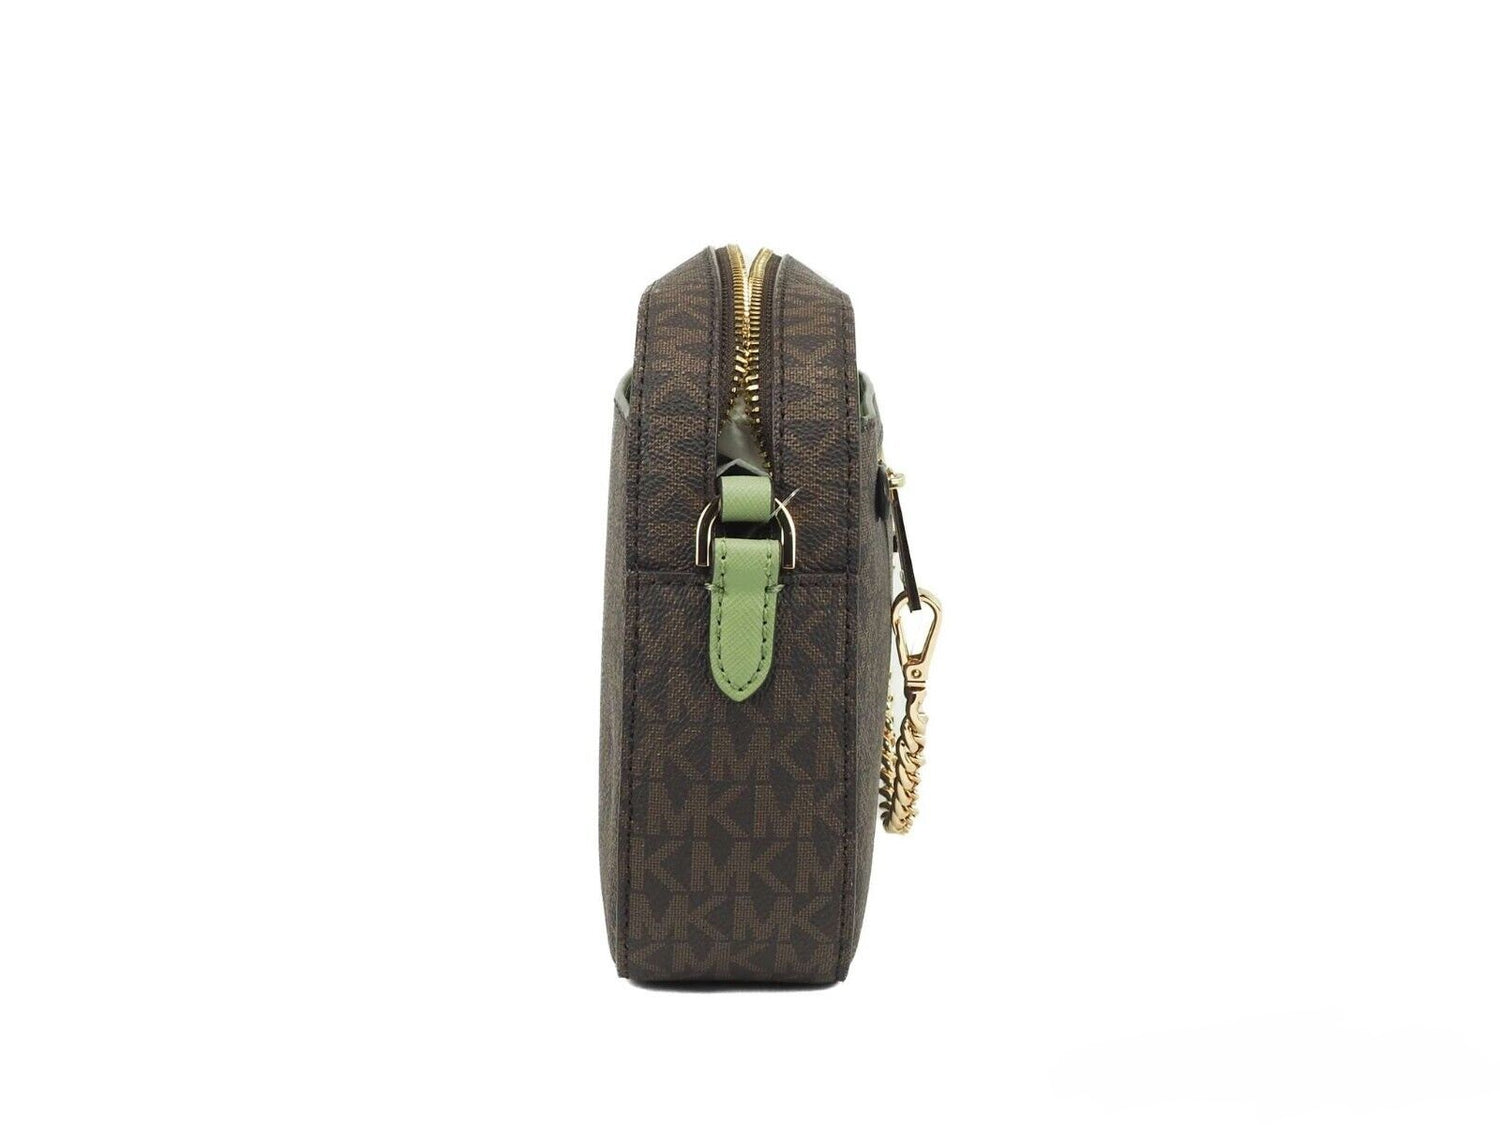 Michael Kors Jet Set Medium Chili Pale Gold PVC Front Zip Chain Tote Bag  Handbag 